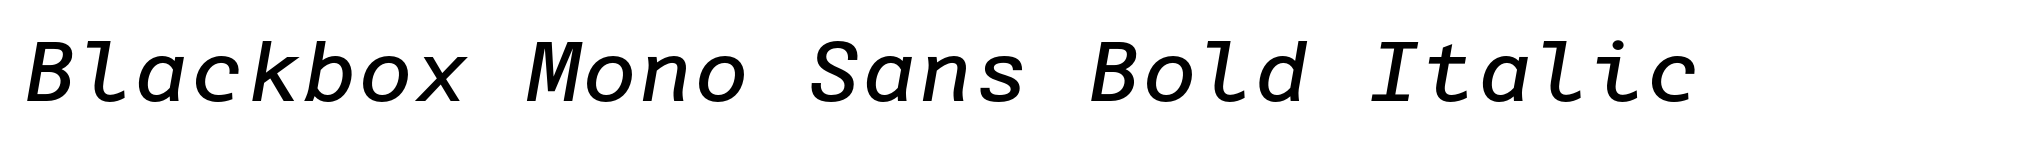 Blackbox Mono Sans Bold Italic image